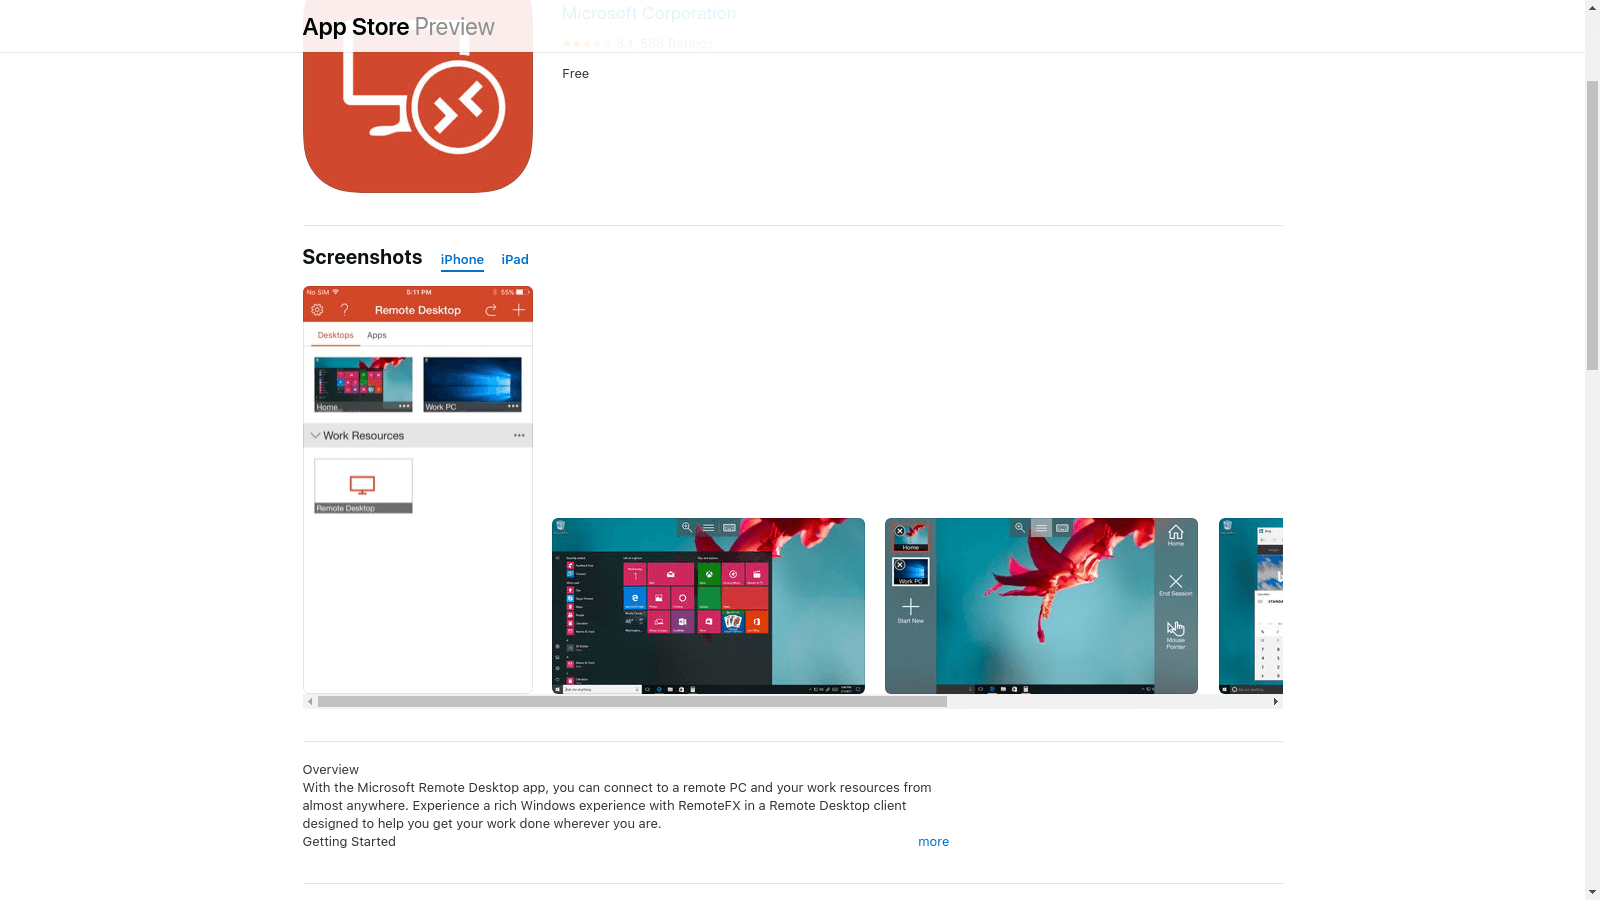 apple remote desktop for ipad